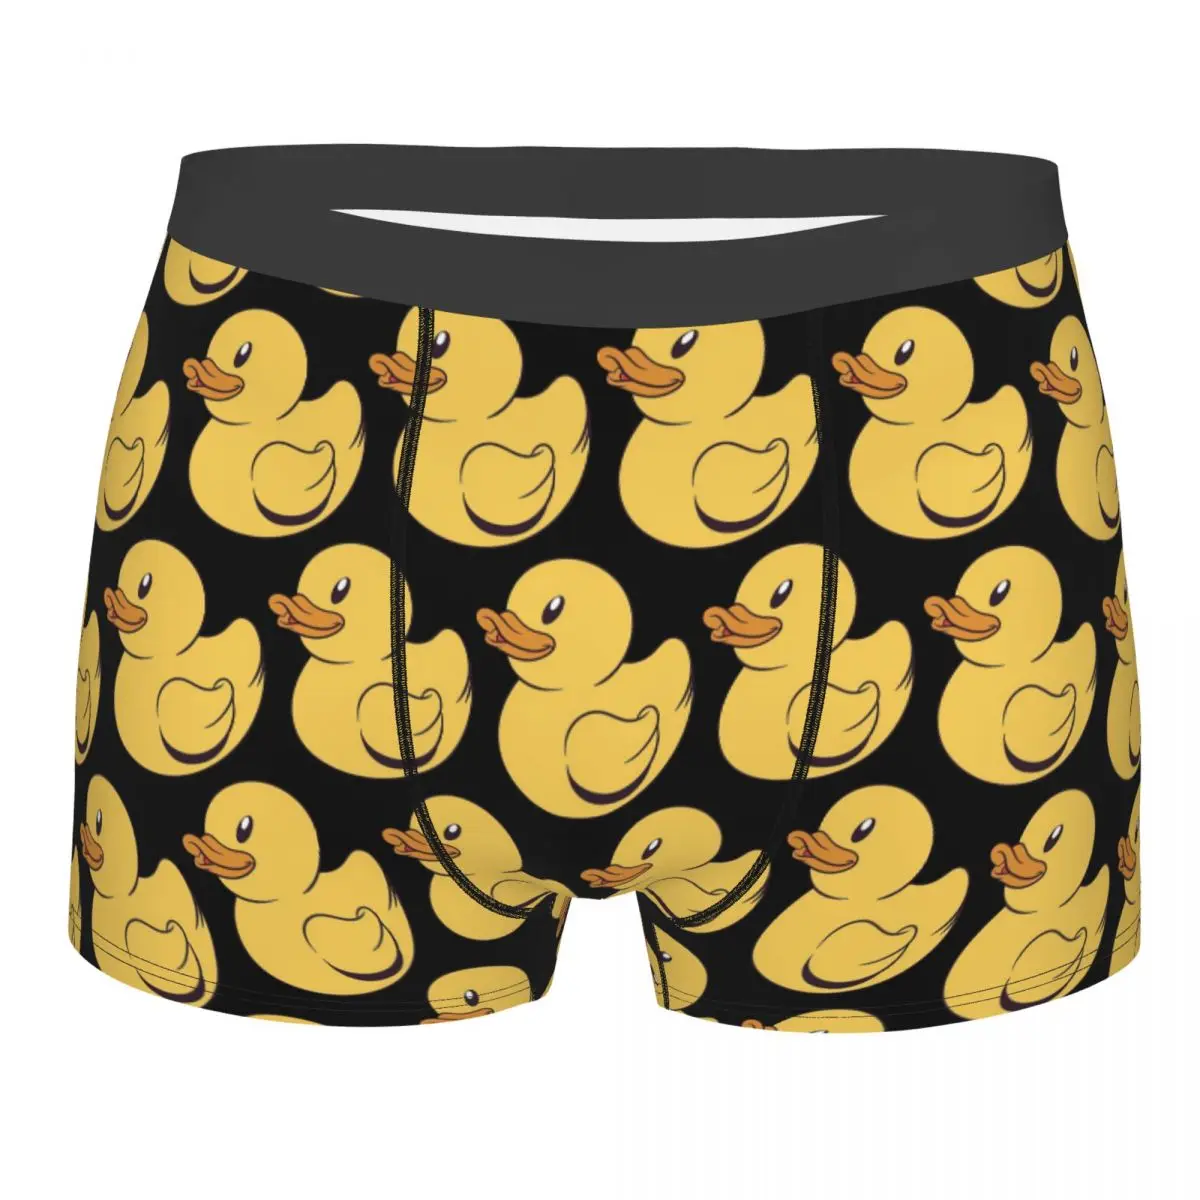 

Plain Ole Rubber Duckie Underpants Breathbale Panties Male Underwear Print Shorts Boxer Briefs